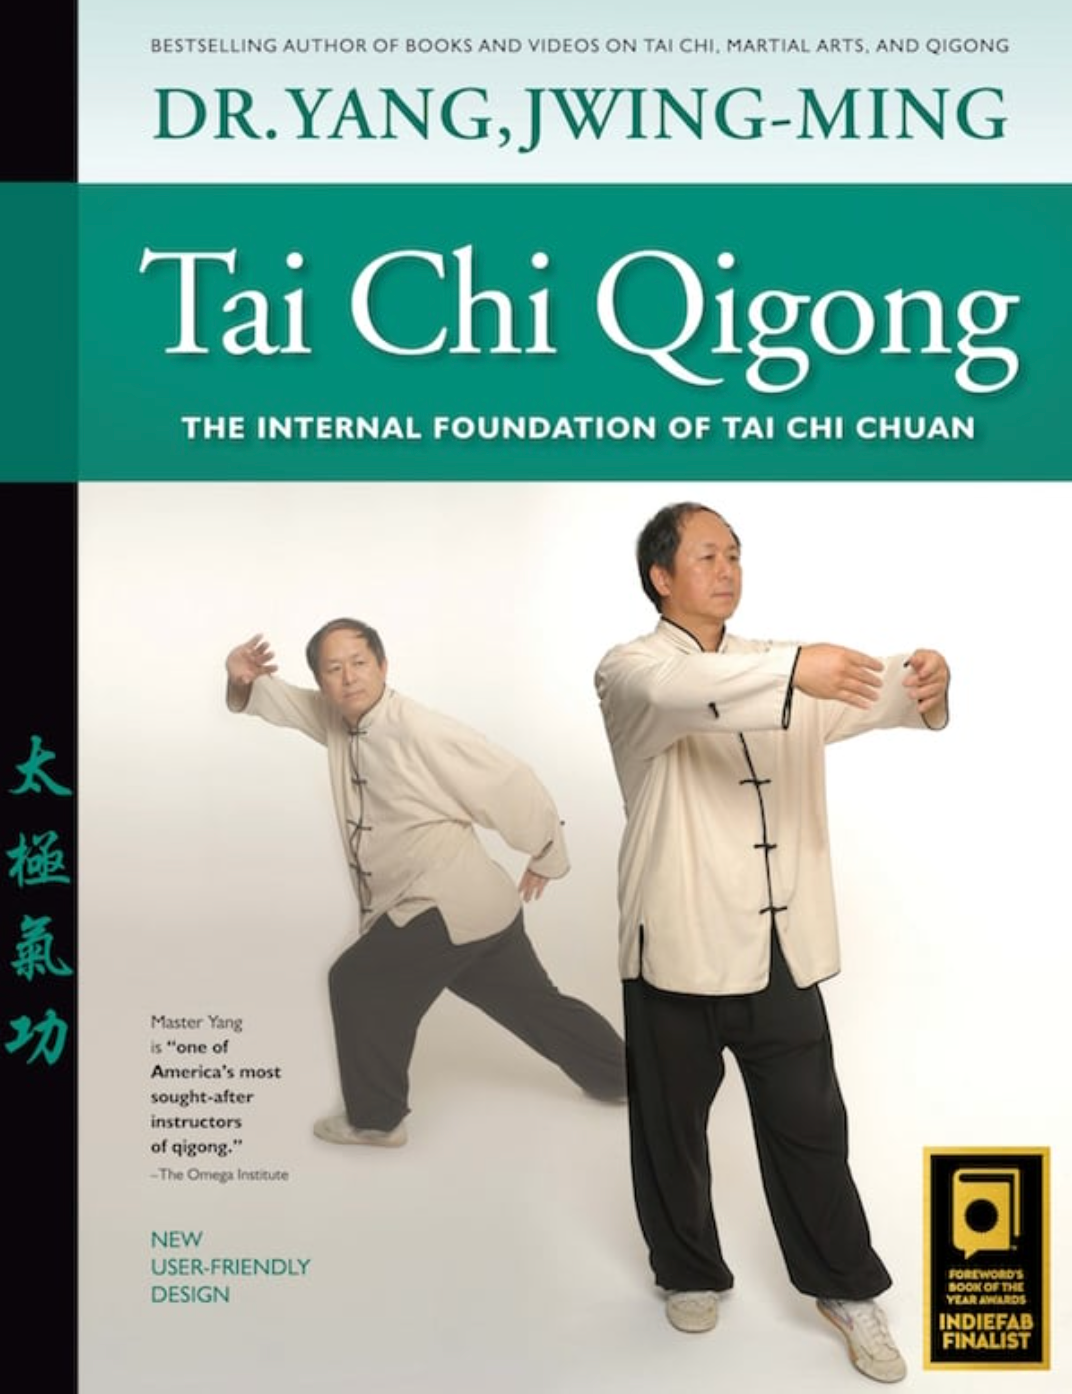 Tai Chi Qigong: The Internal Foundation of Tai Chi Chuan by Dr Yang, Jwing Ming - Budovideos Inc